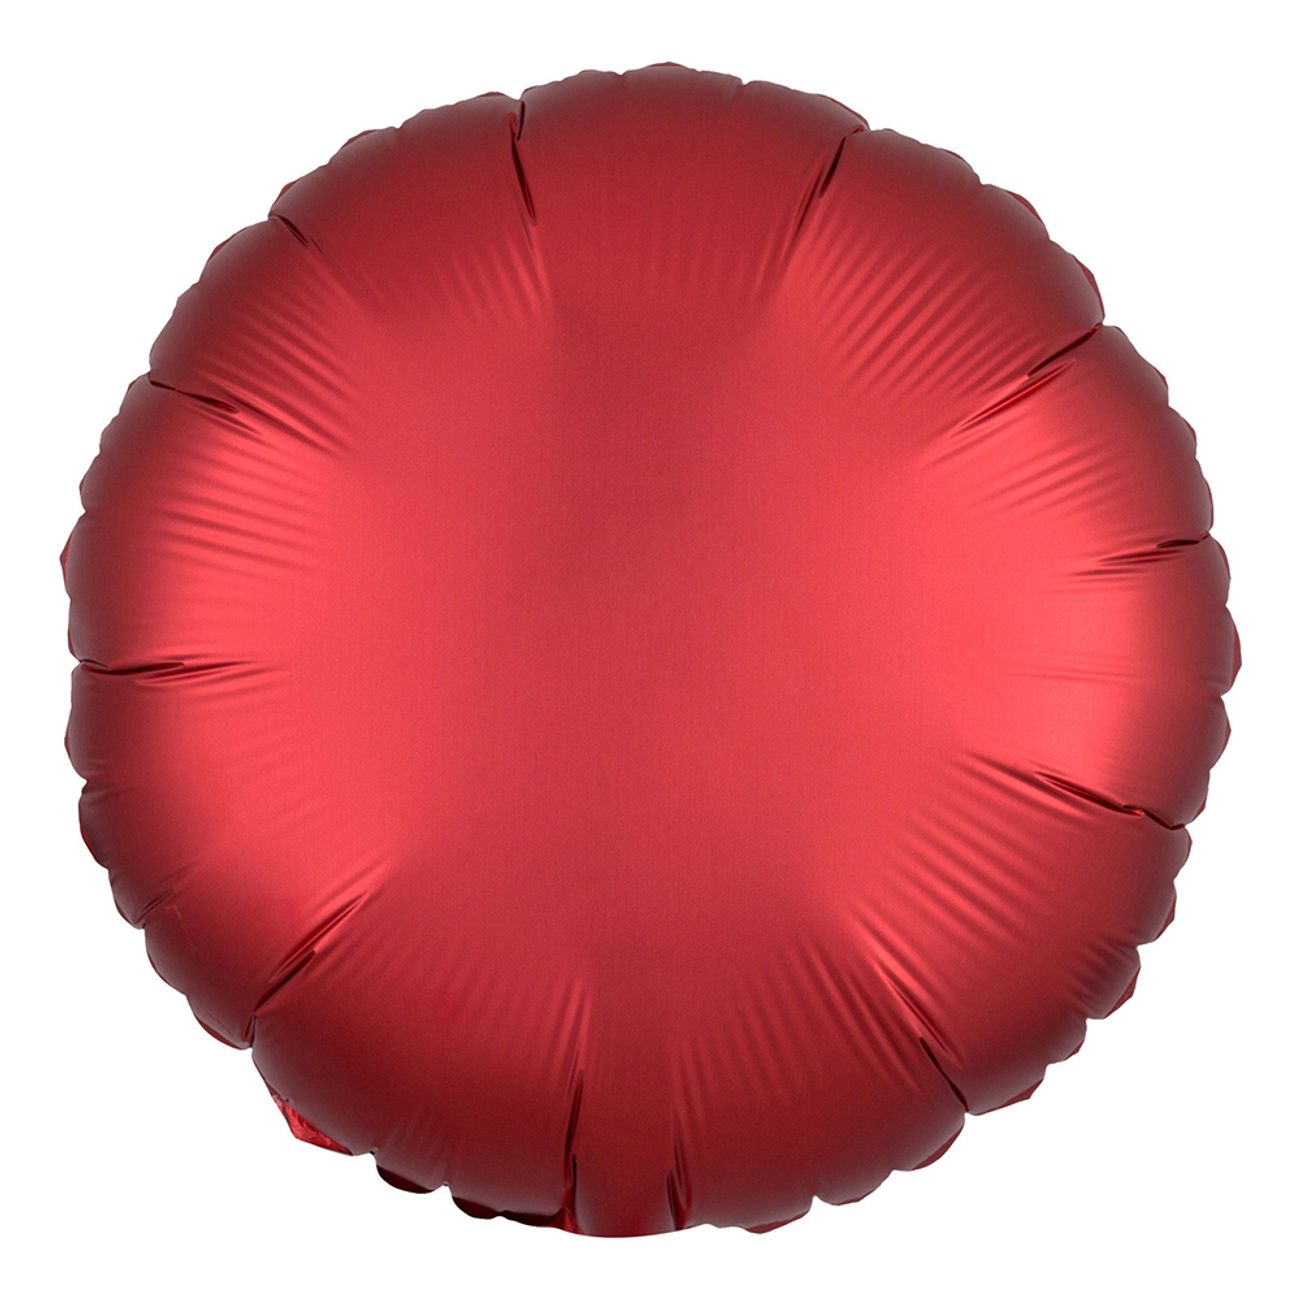 folieballong-rund-satin-sangriarod-59839-2